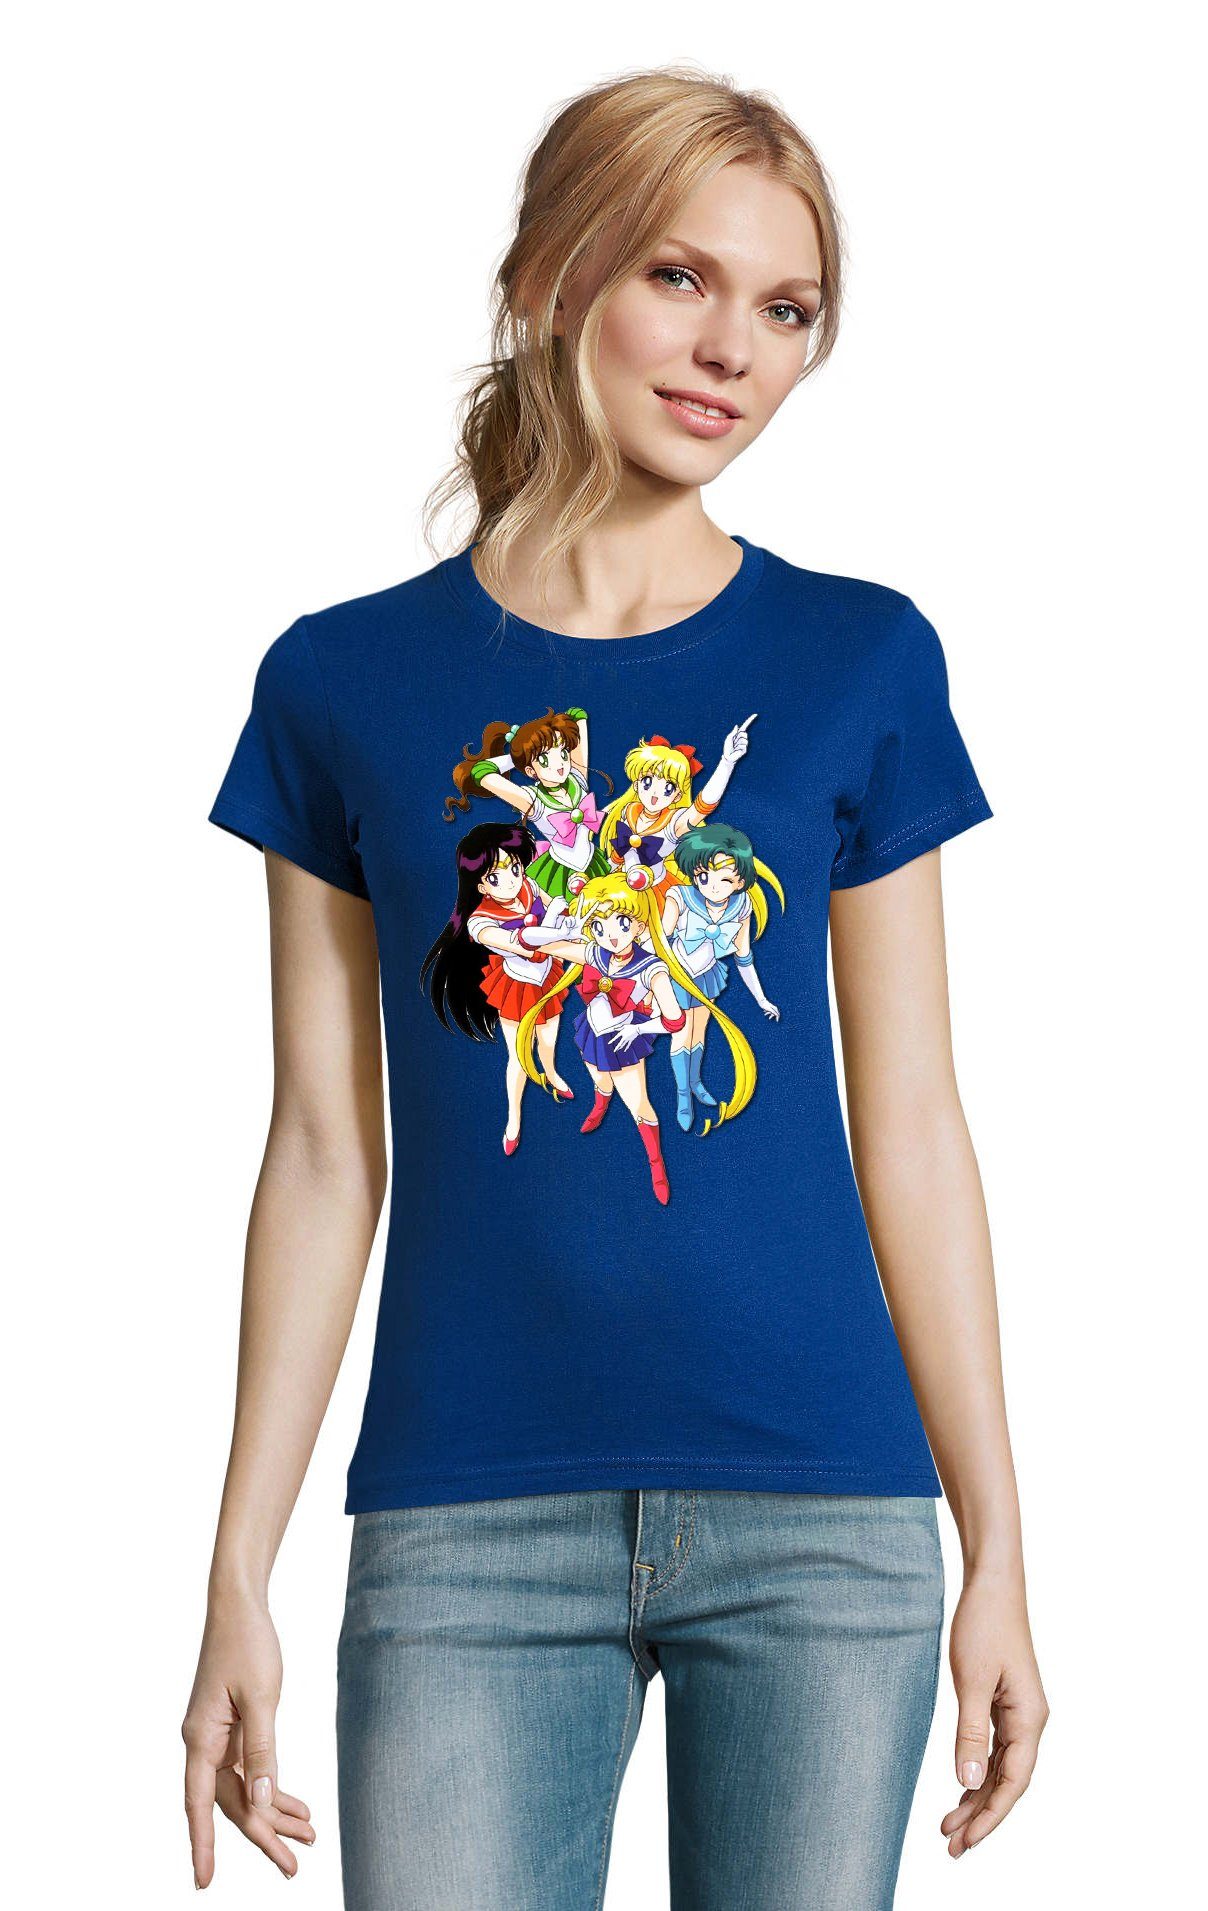 Blondie & Brownie T-Shirt Damen Fun Comic Sailor Moon and Friends Anime Manga Royalblau